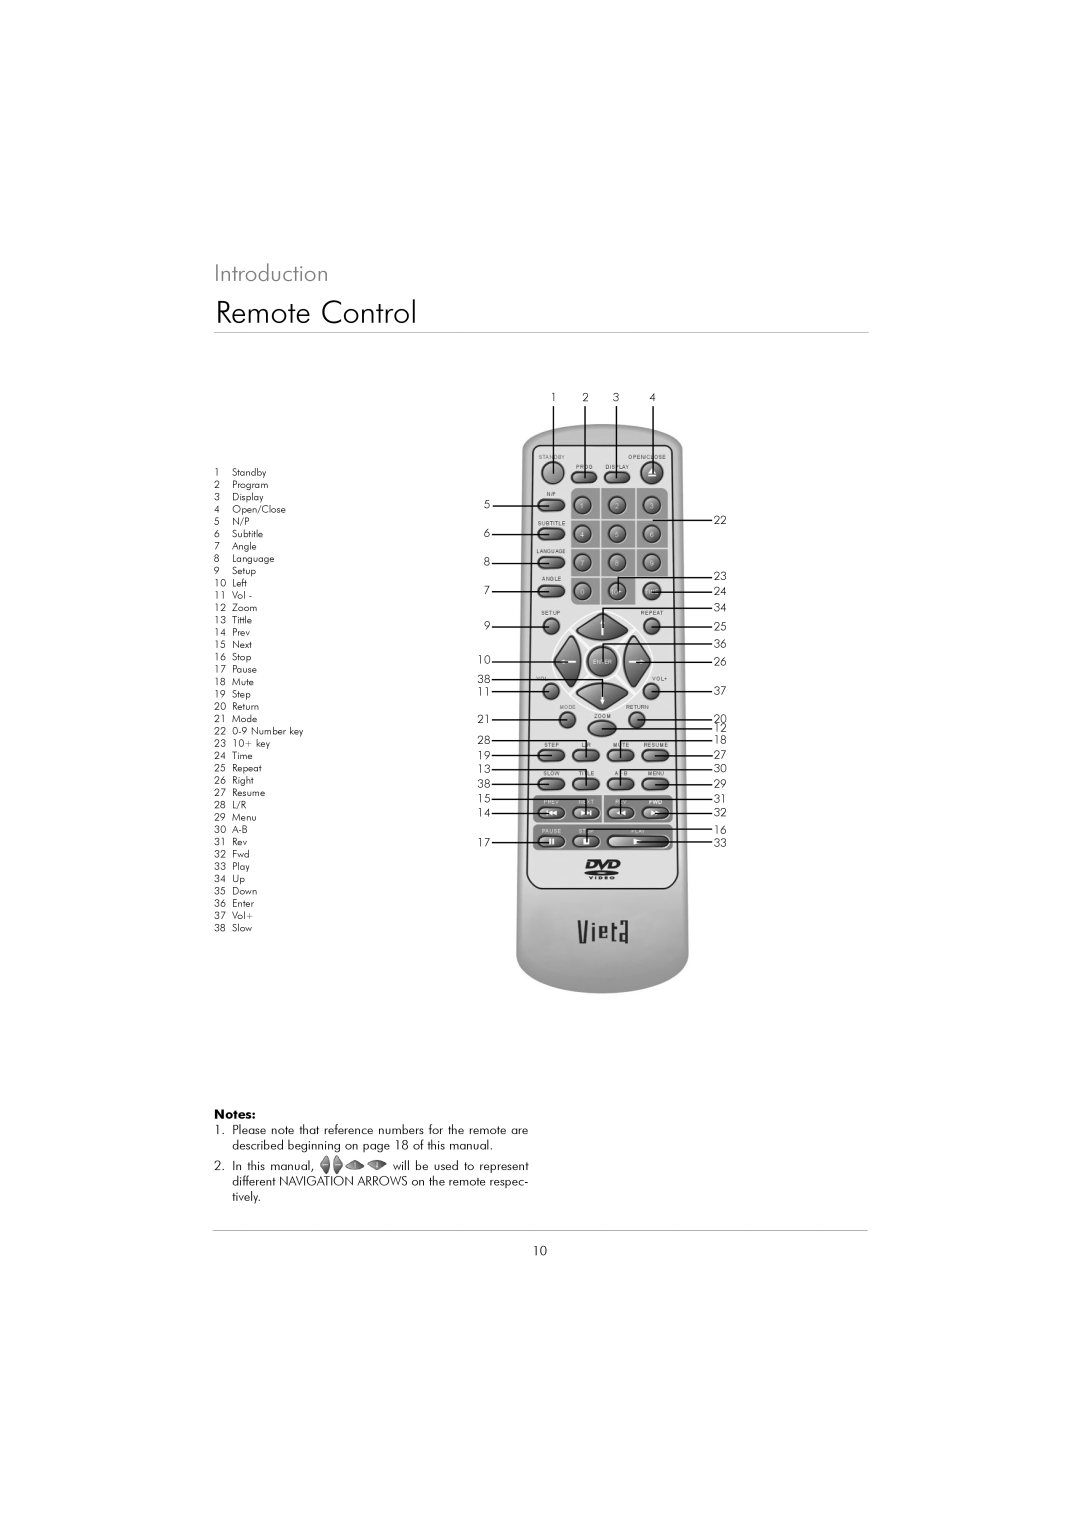 Kodak DVD 40 user manual Remote Control, Introduction 